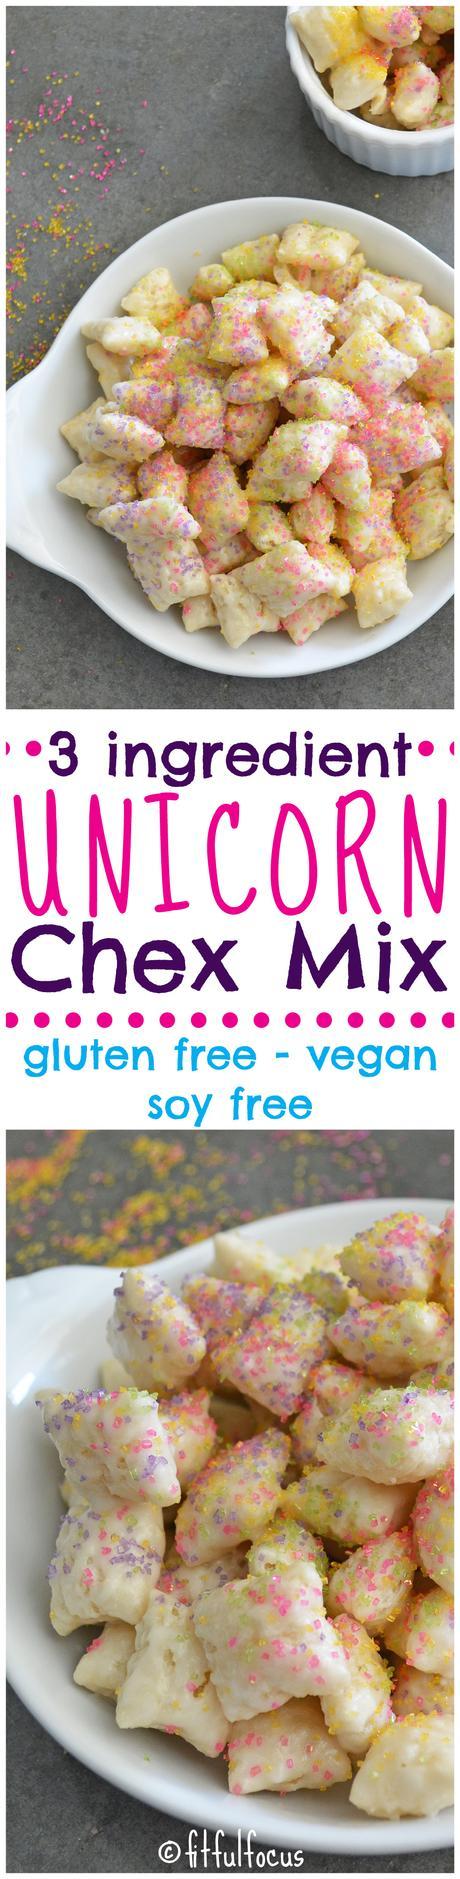 Unicorn Chex Mix (gluten free, vegan, soy free)